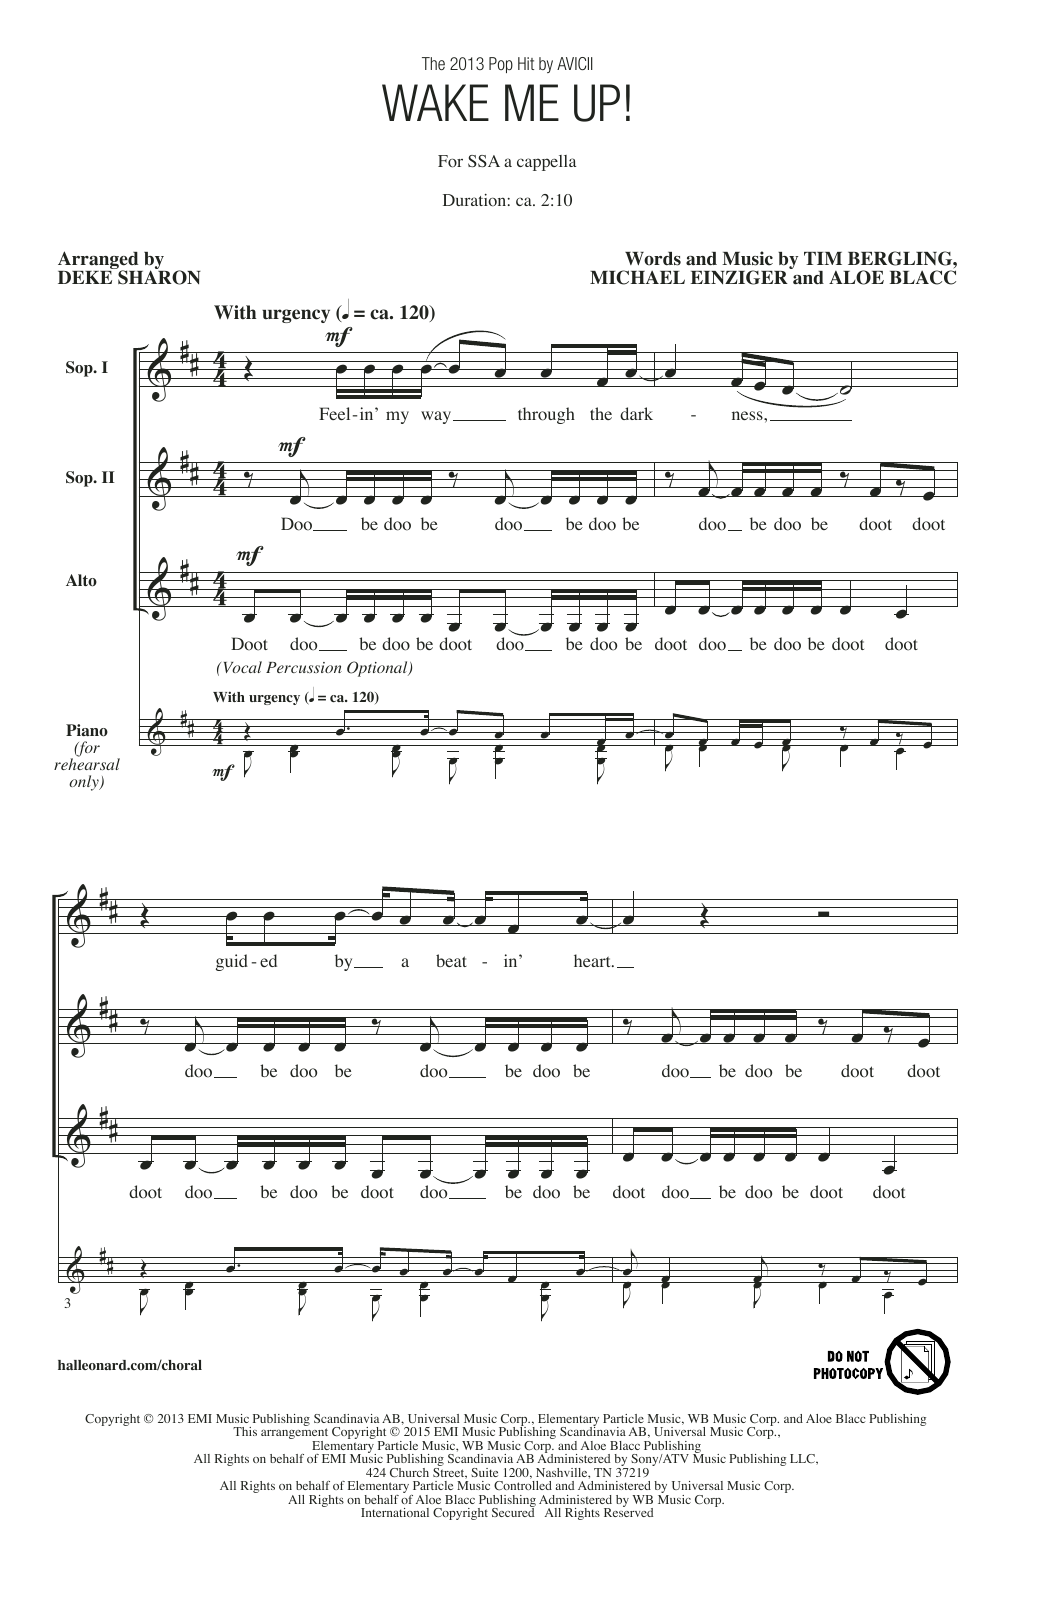 Avicii Wake Me Up! (arr. Deke Sharon) Sheet Music Notes & Chords for SSA - Download or Print PDF